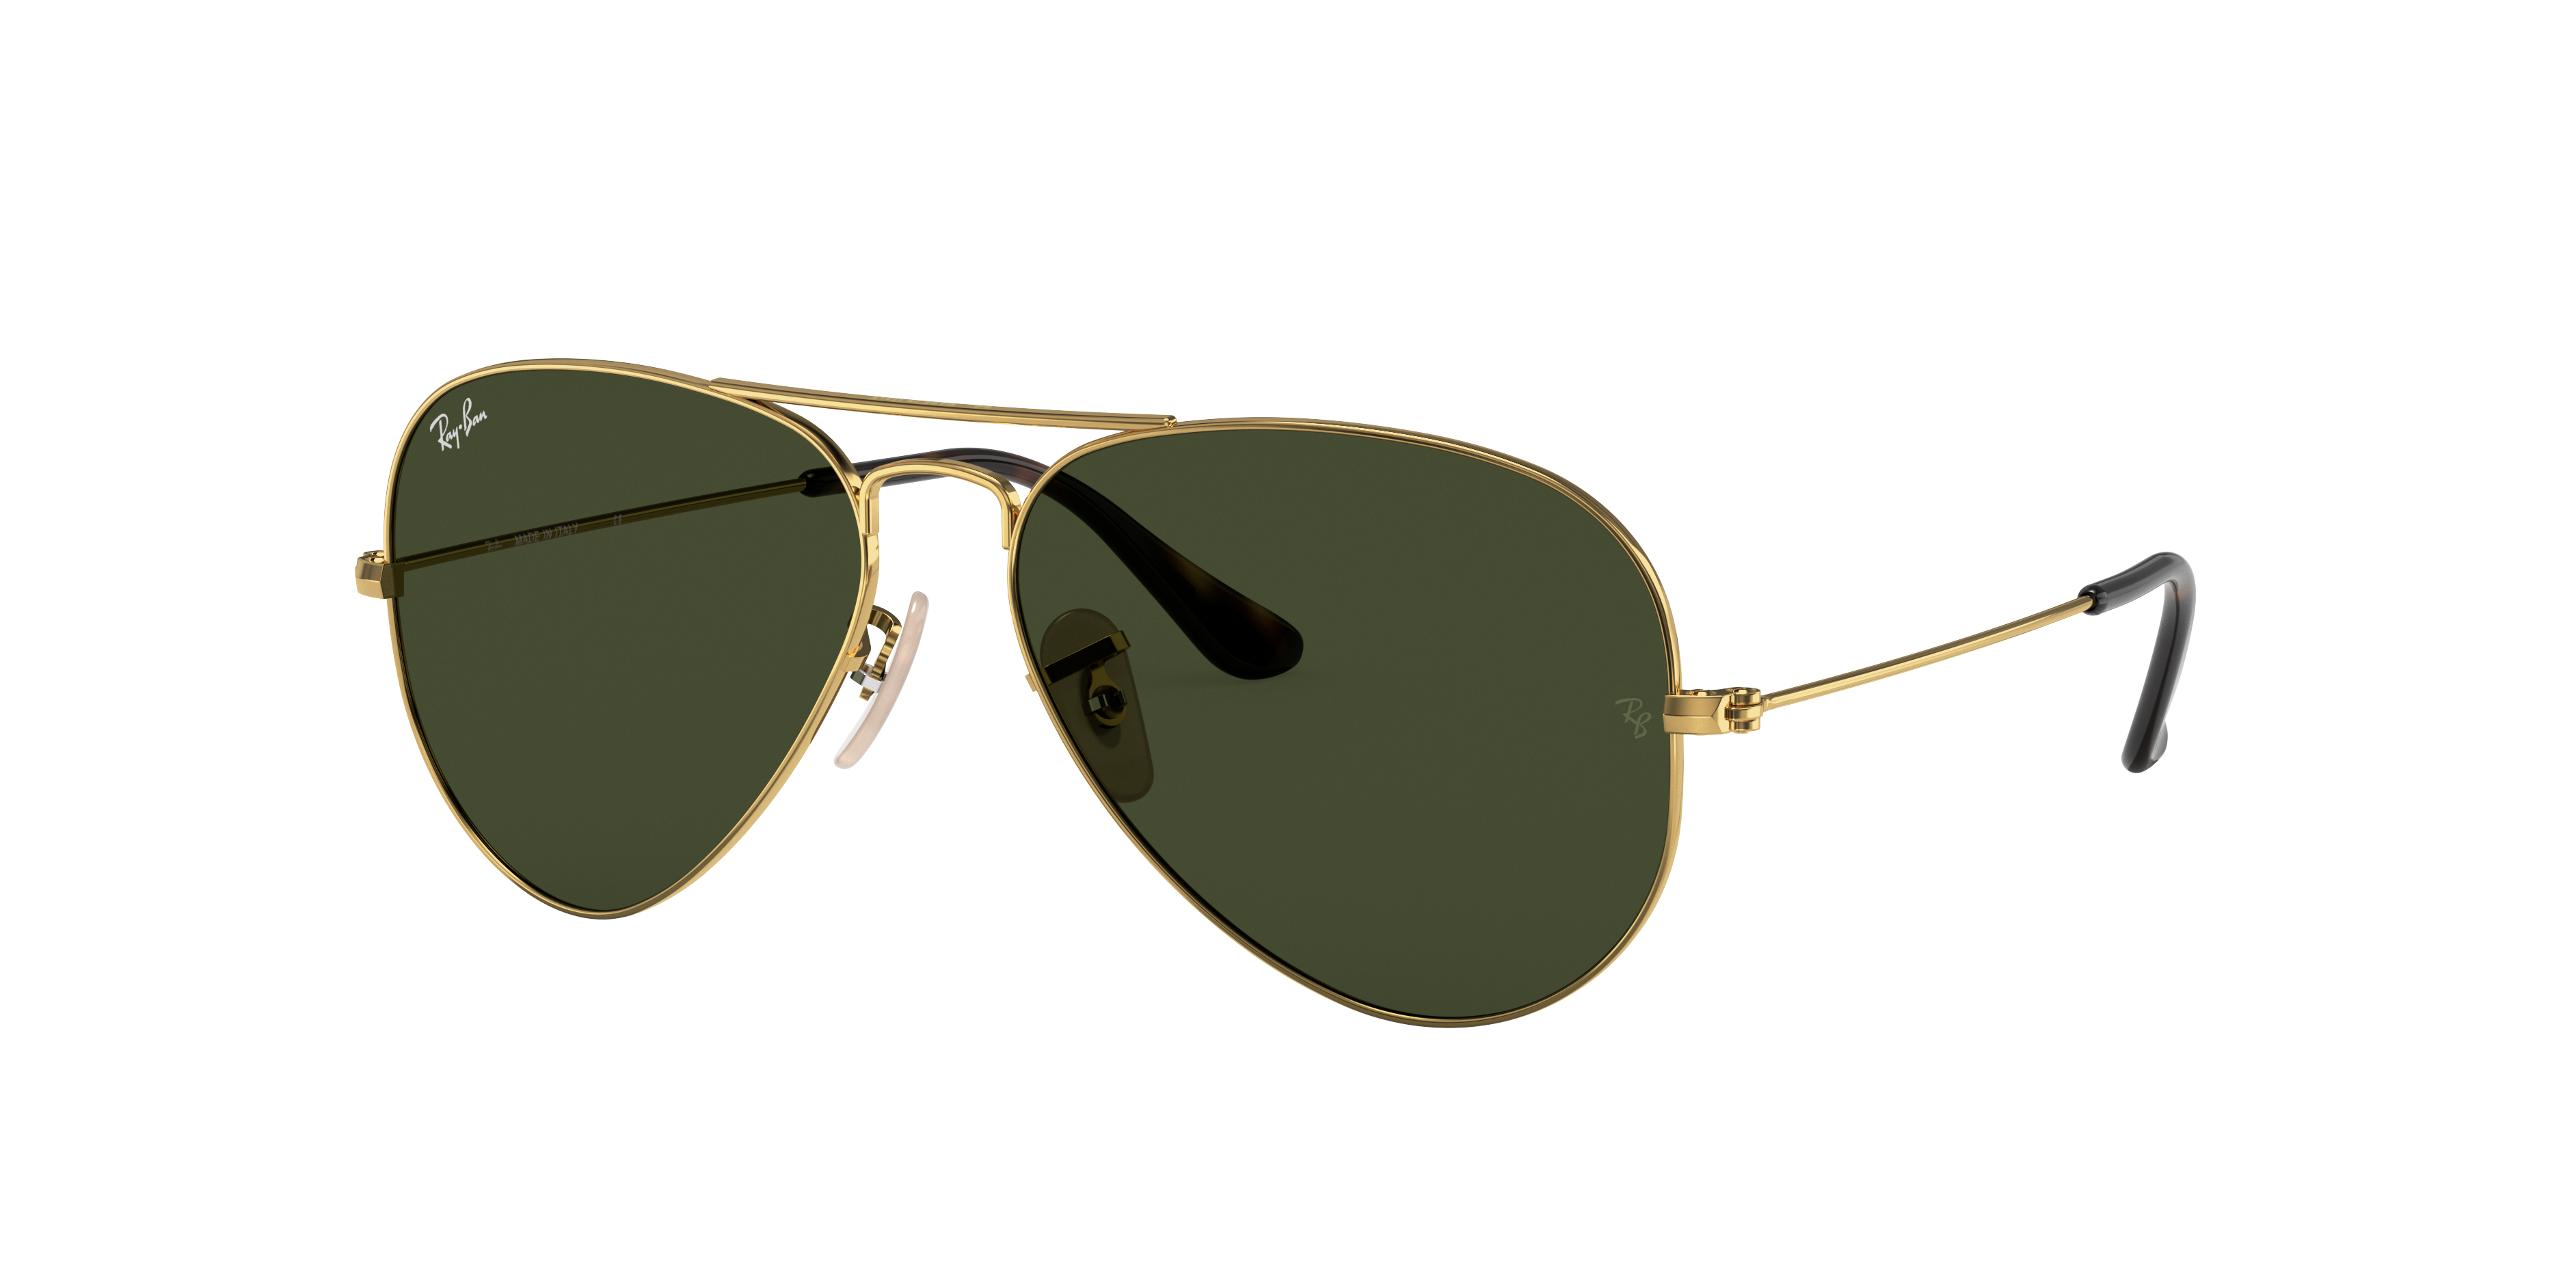 Mile Highs - Classic Aviator Sunglasses | Knockaround